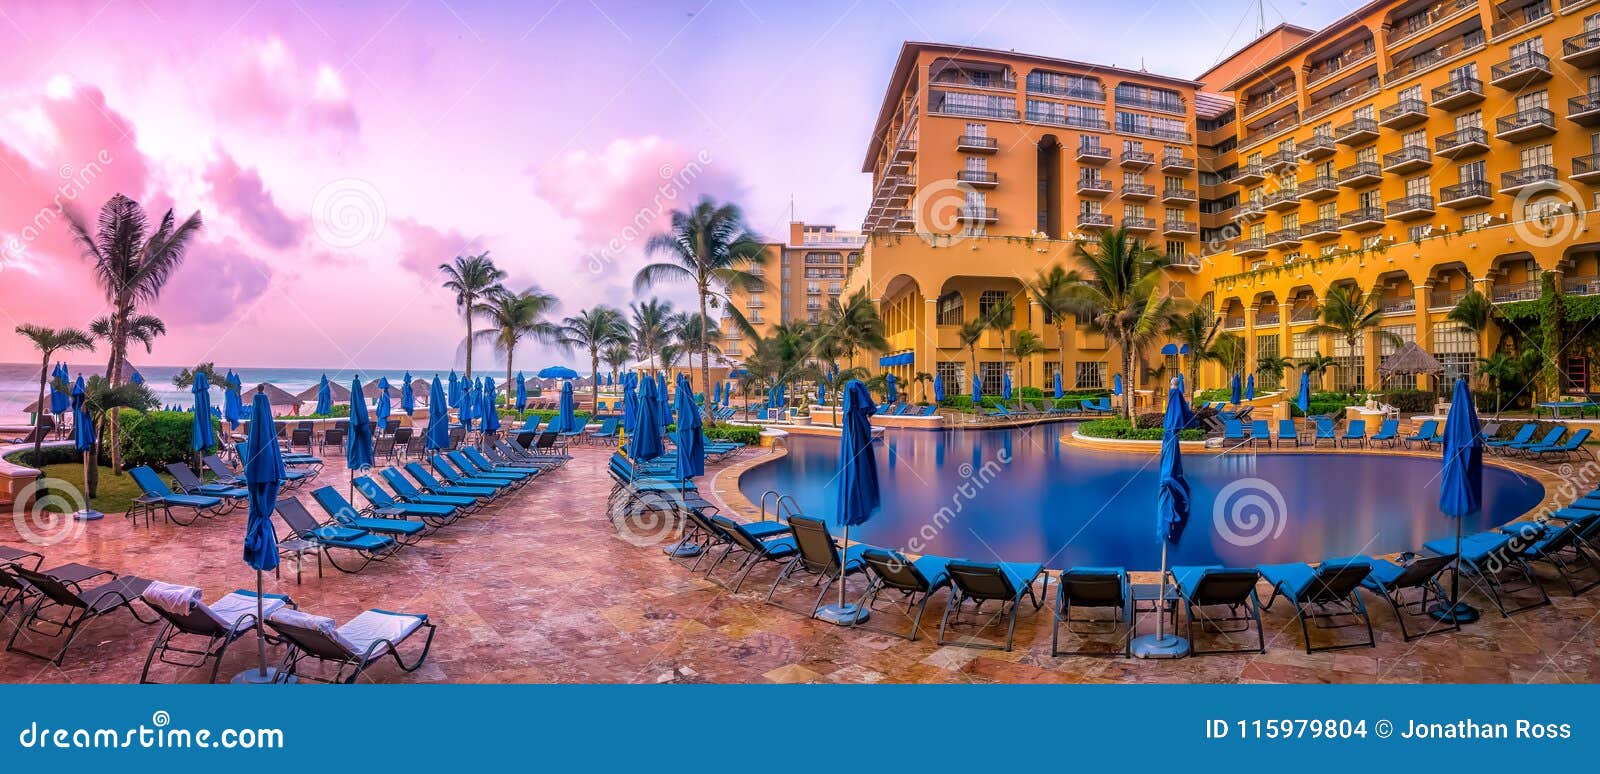 cancun beach resort with palms